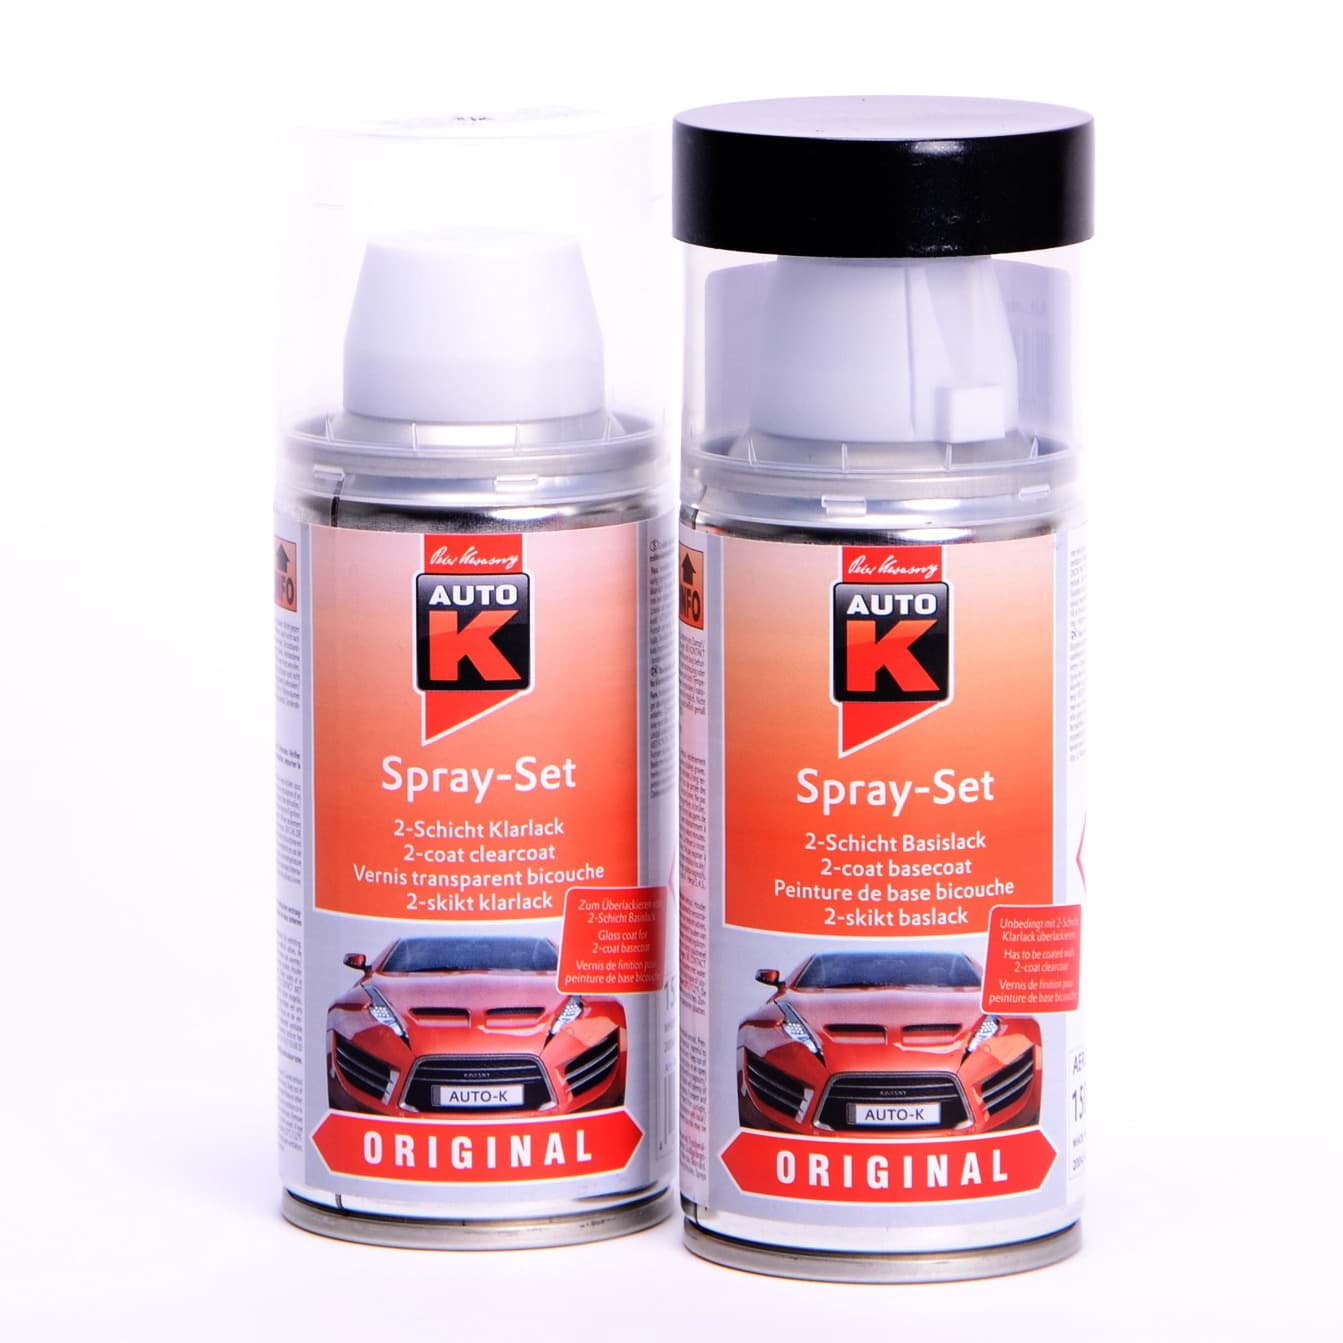 Auto-K Spray-Set Autolack für Renault 620 Gris Argent met 43319 resmi